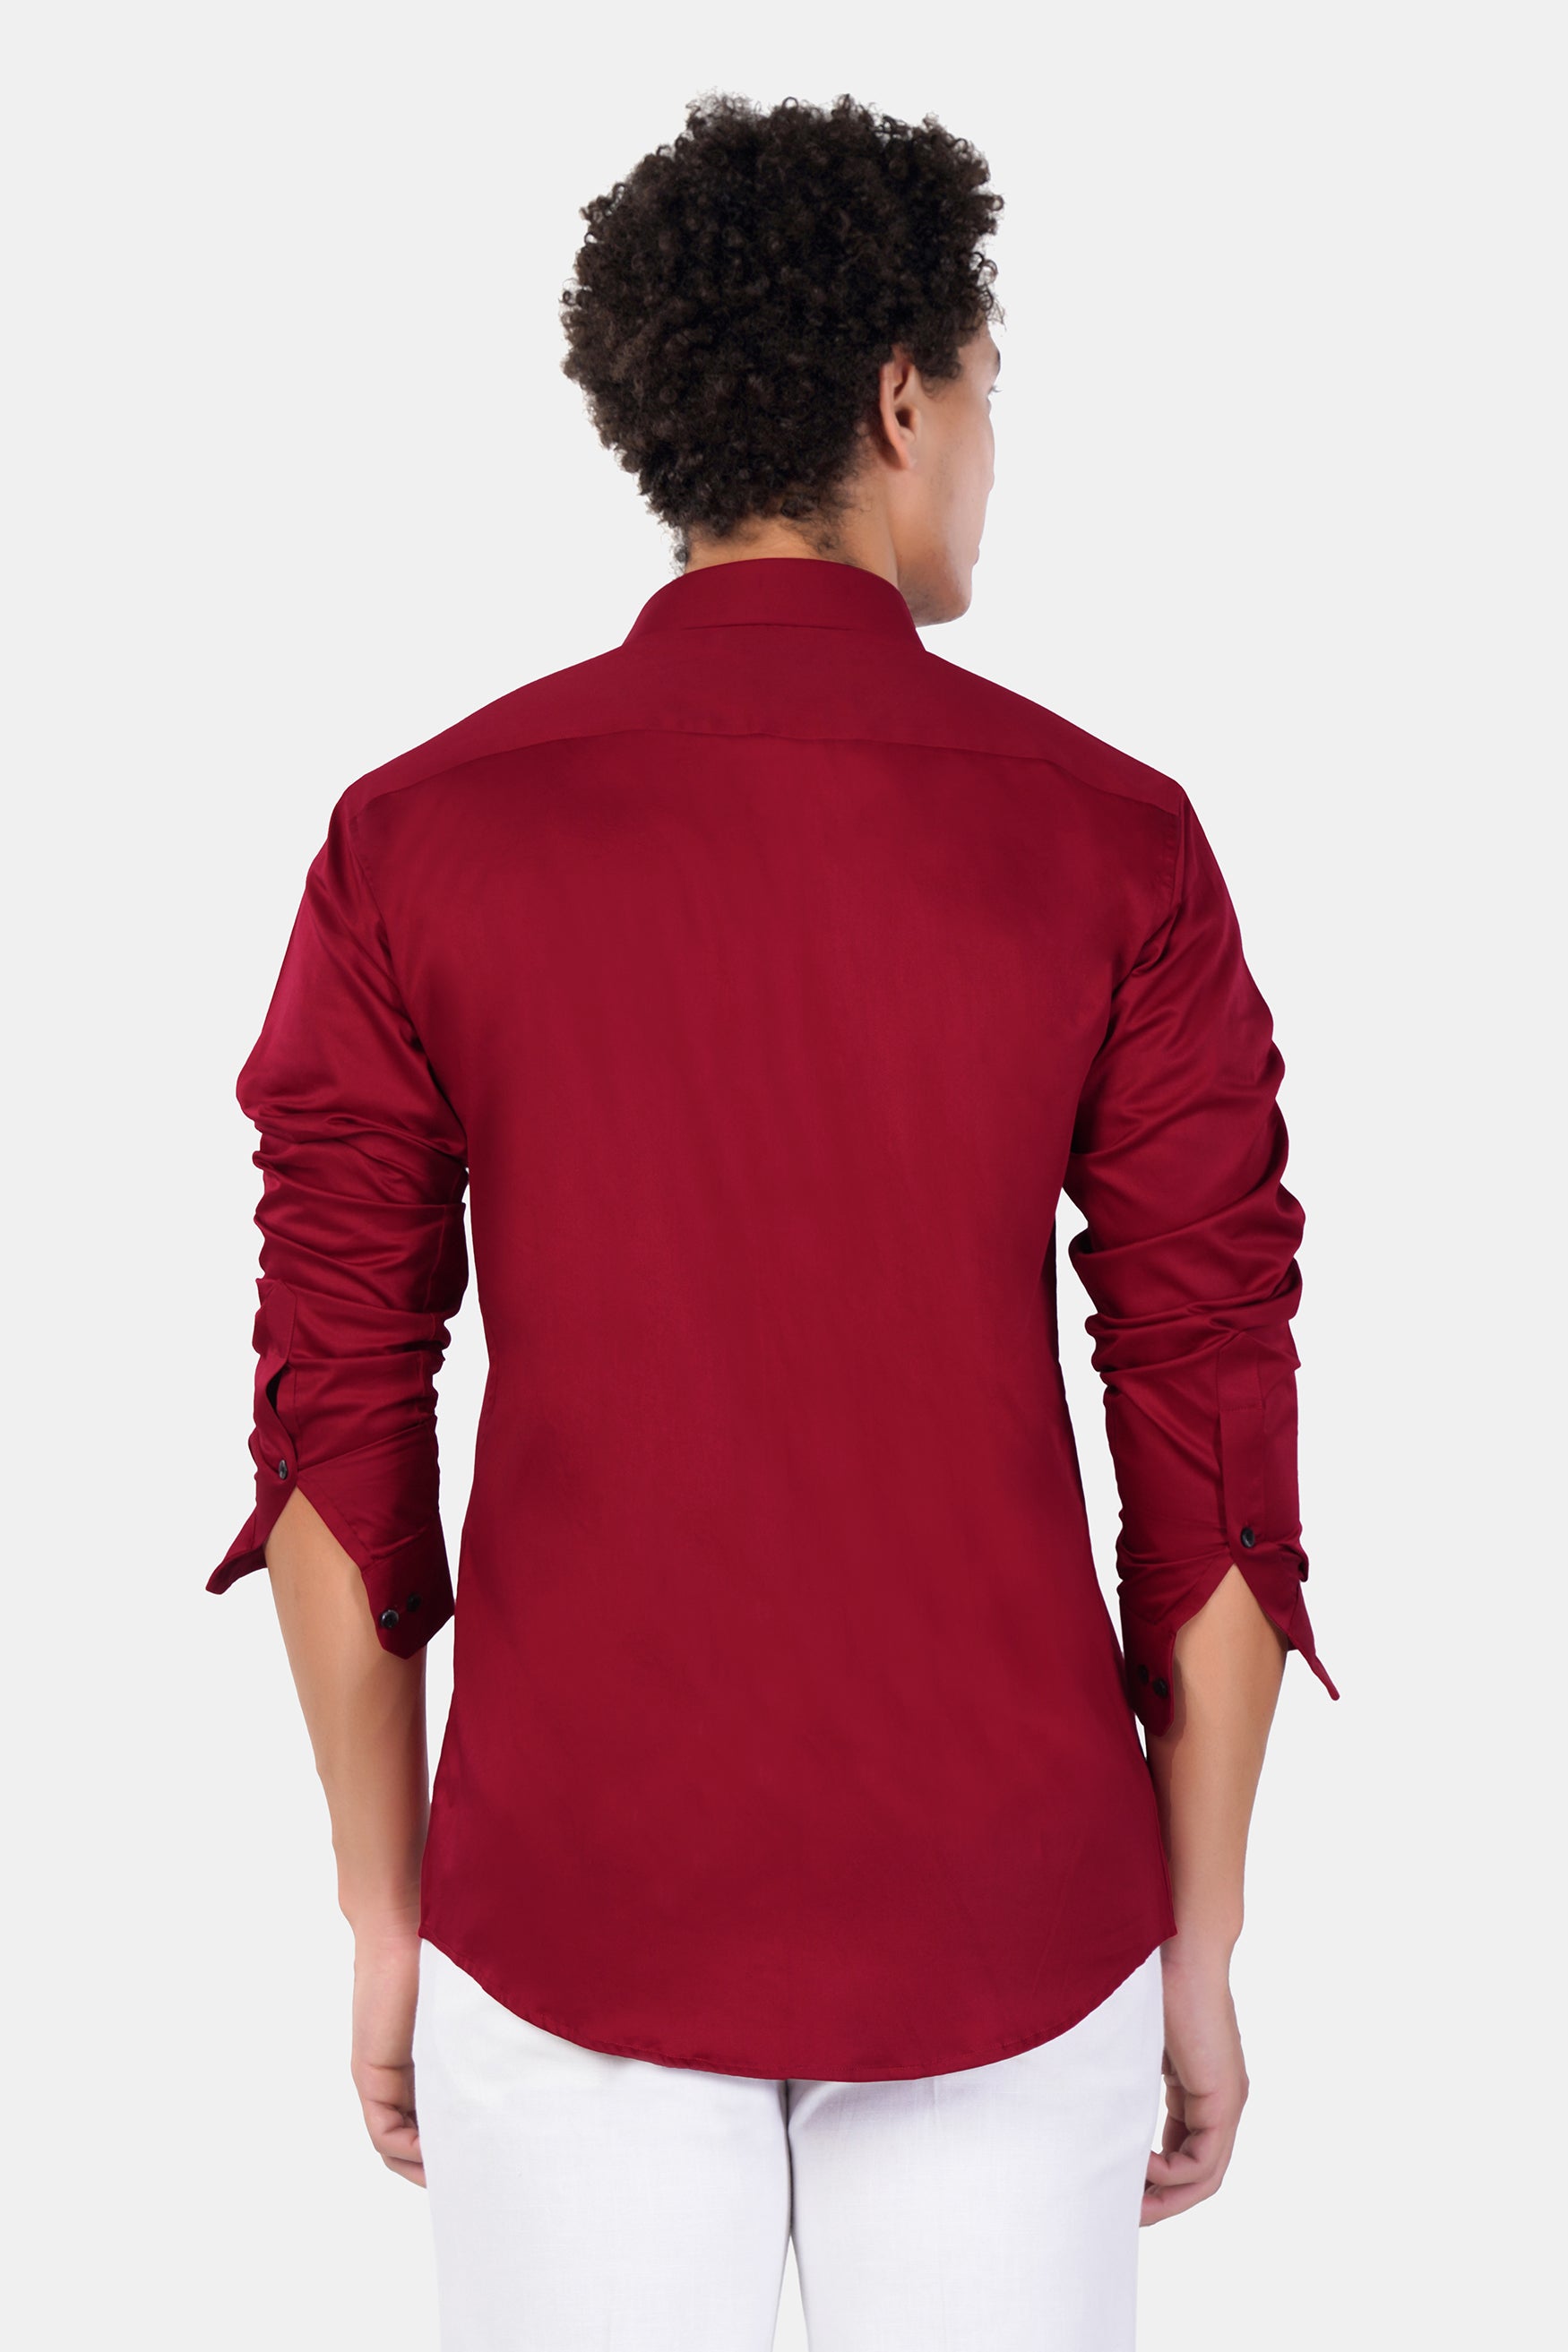 Merlot Red Nikola Tesla Printed Subtle Sheen Super Soft Premium Cotton Designer Shirt